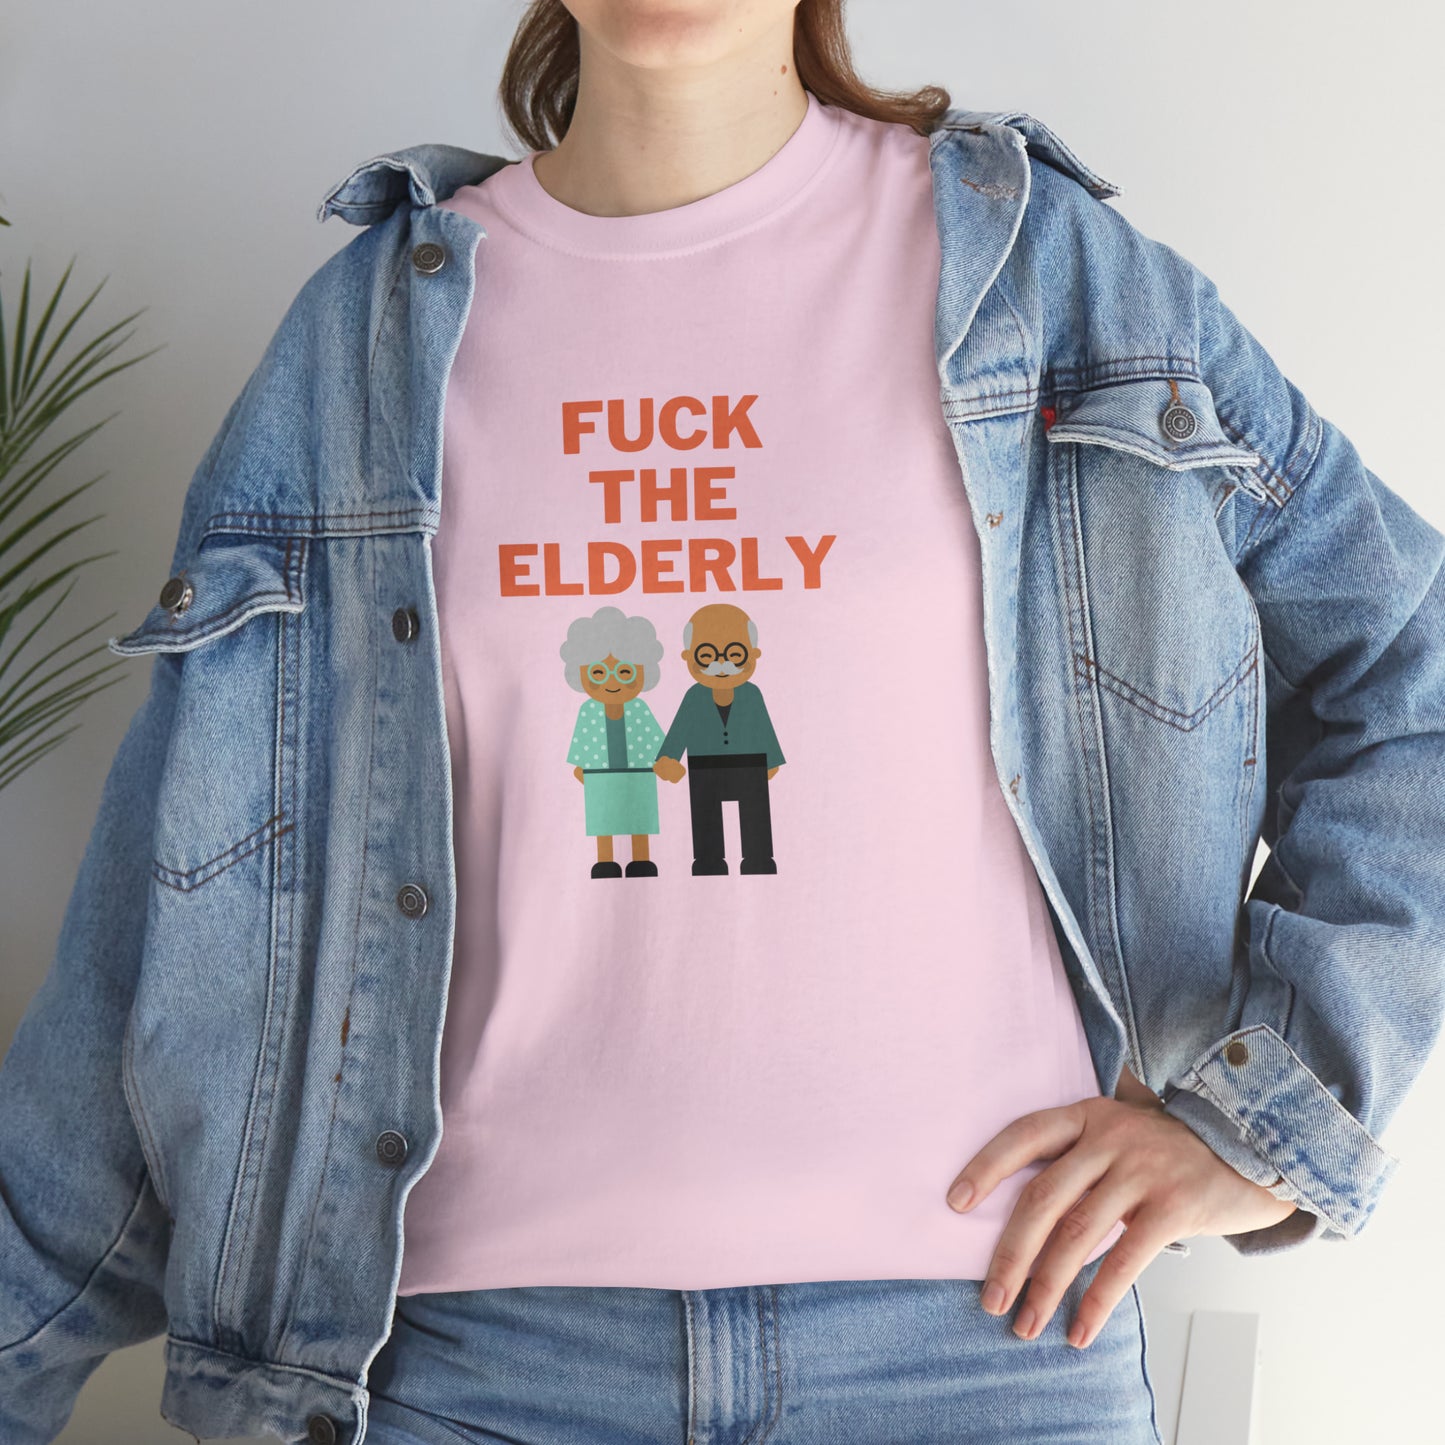 F**k the elderly T-Shirt